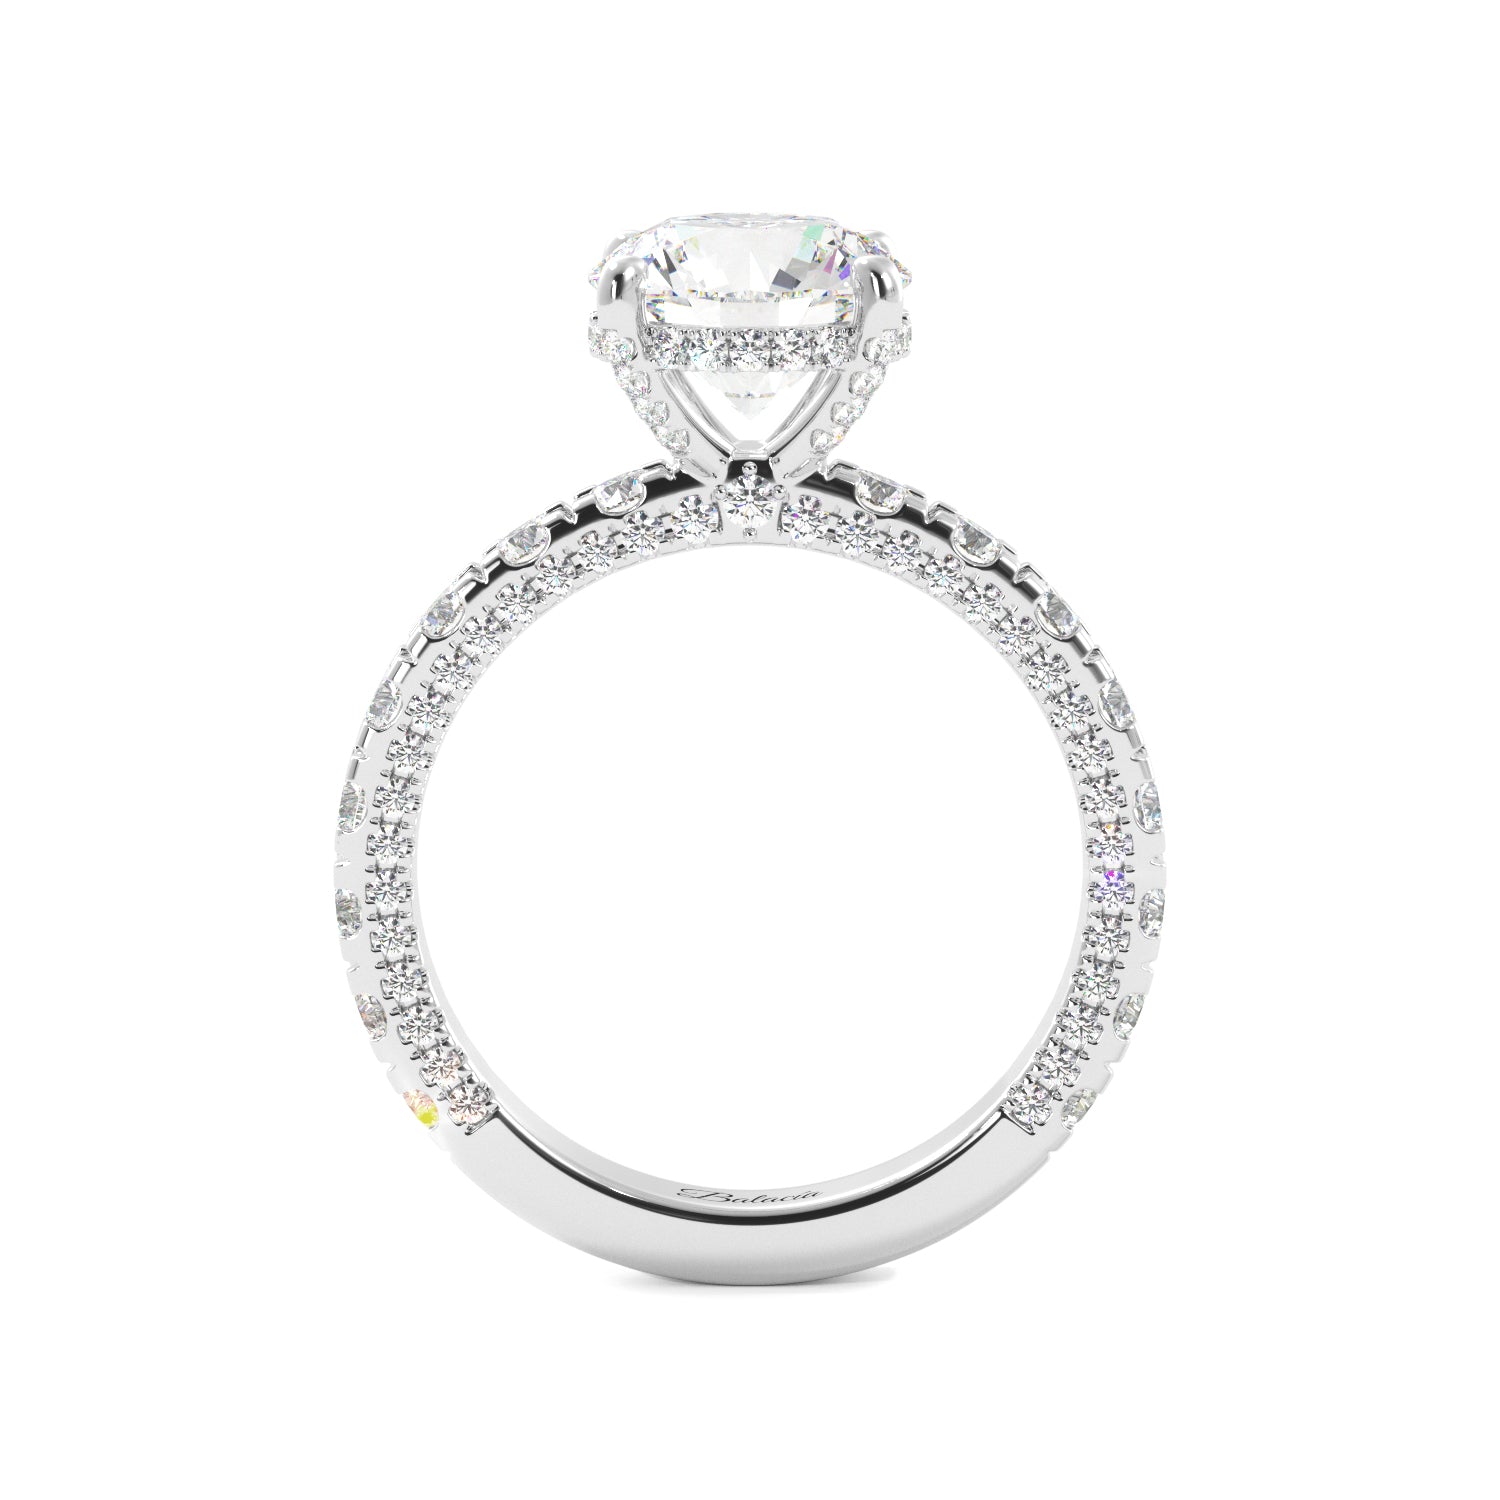 The Balacia Engagement Ring 2 Carat Triple Sided Diamond Ring